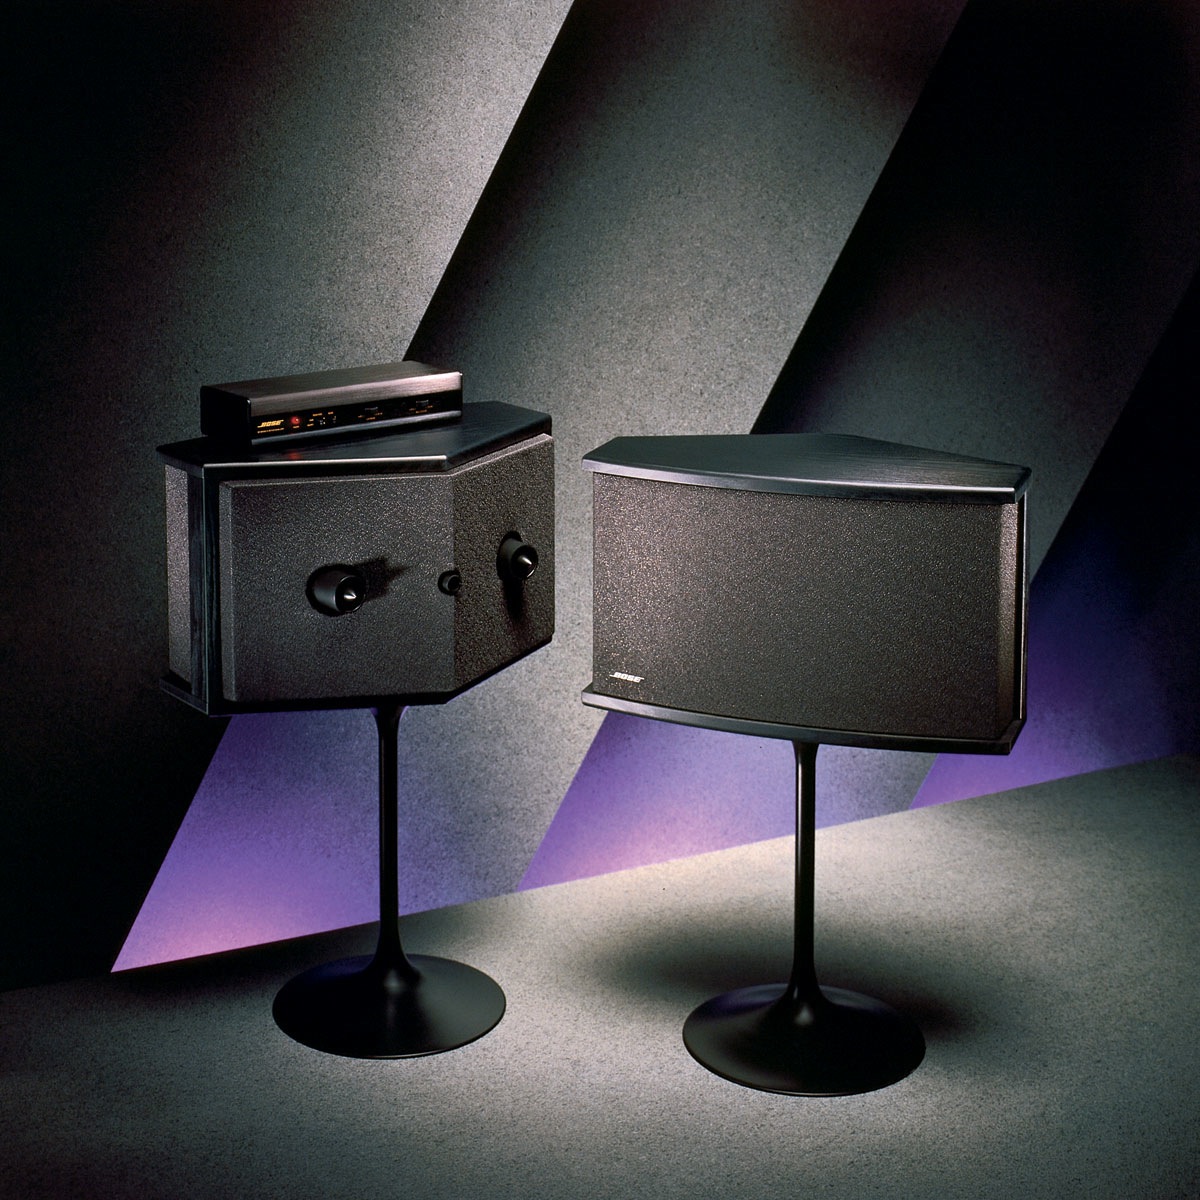 Sistem de boxe stereo Bose 901  - Sistem de boxe stereo Bose 901